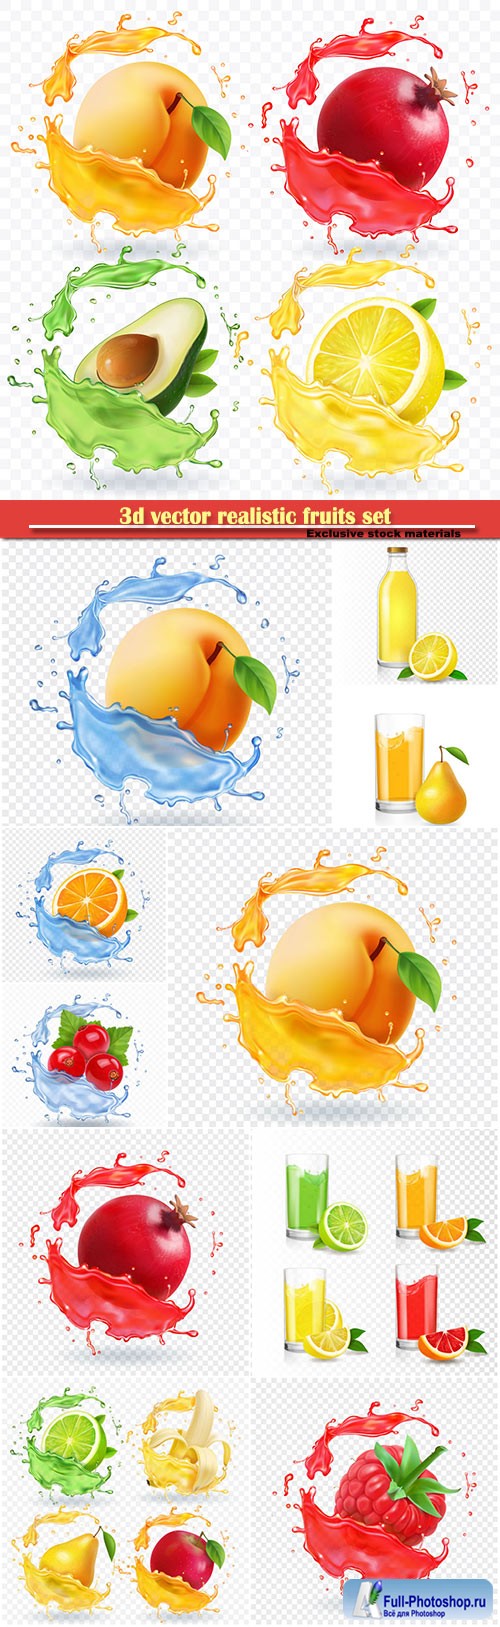 3d vector realistic fruits set, banana, apple, lime, pear juice splashes